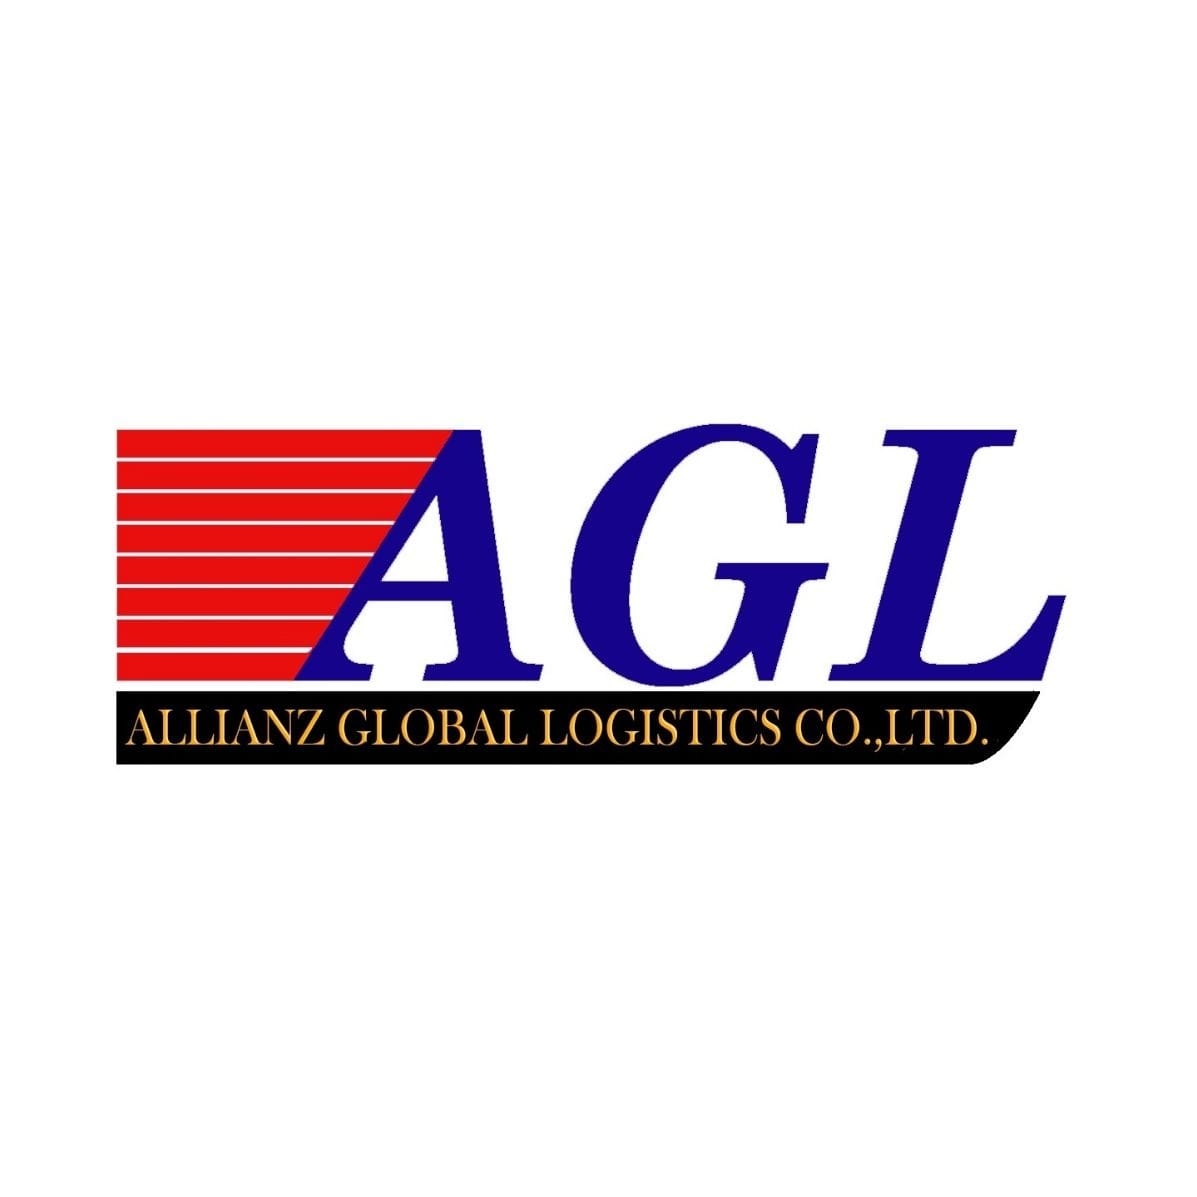 Allianz Global Logistics Co.,Ltd.